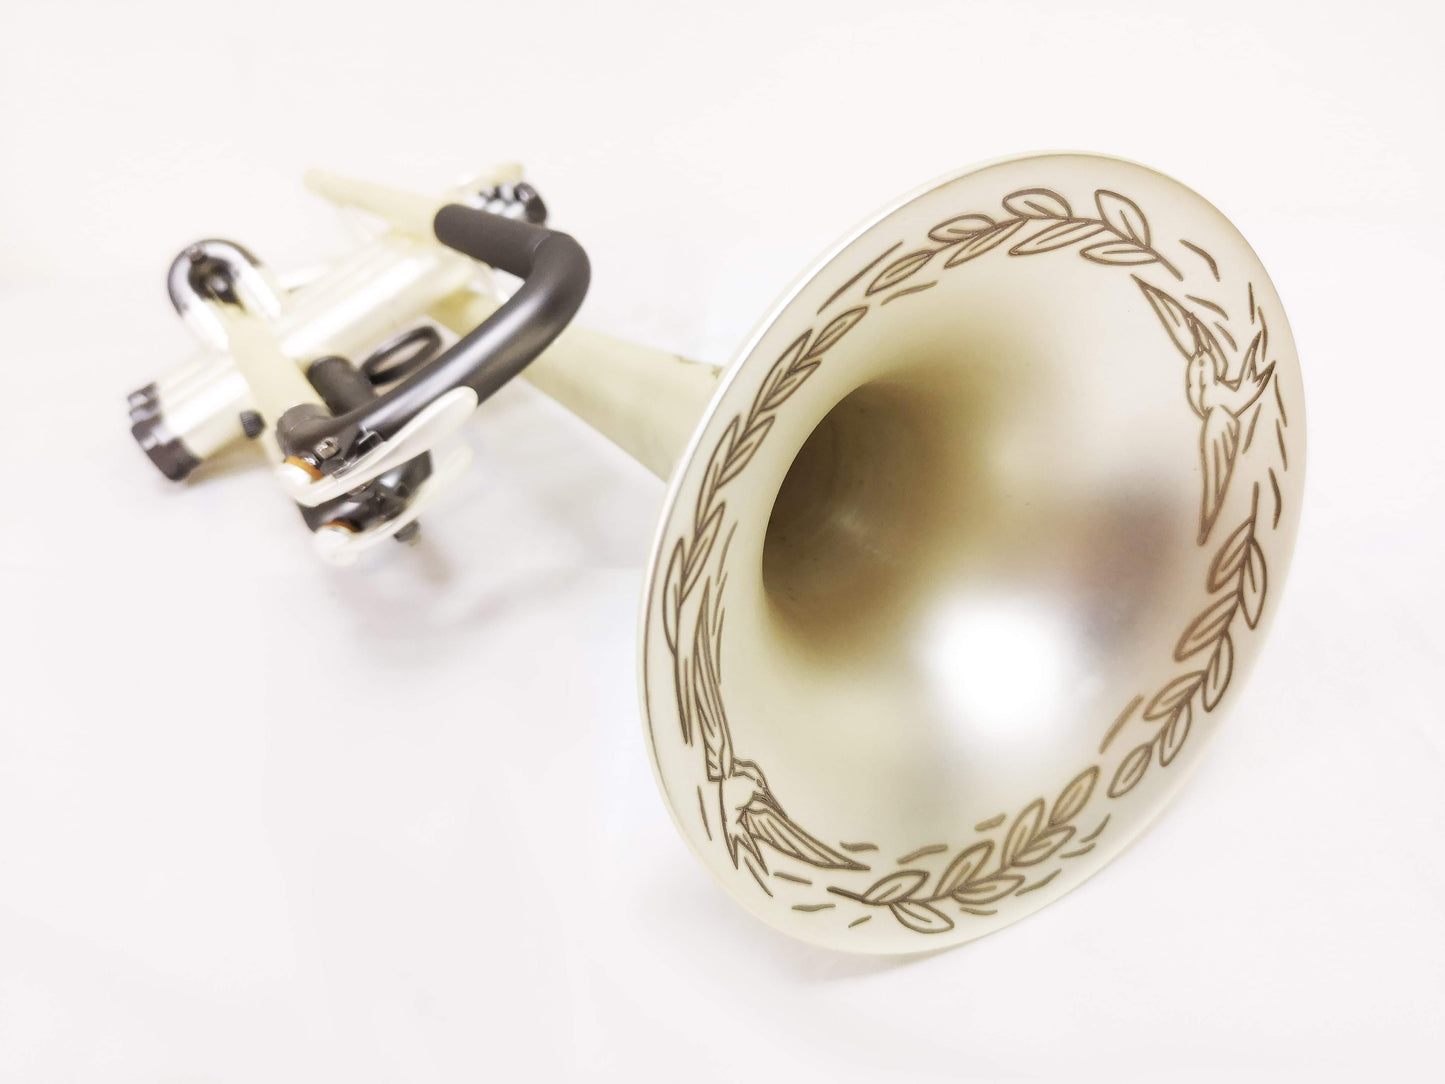 Revelation Series Professional Trumpet - Reverse Leadpipe (Gen 2)